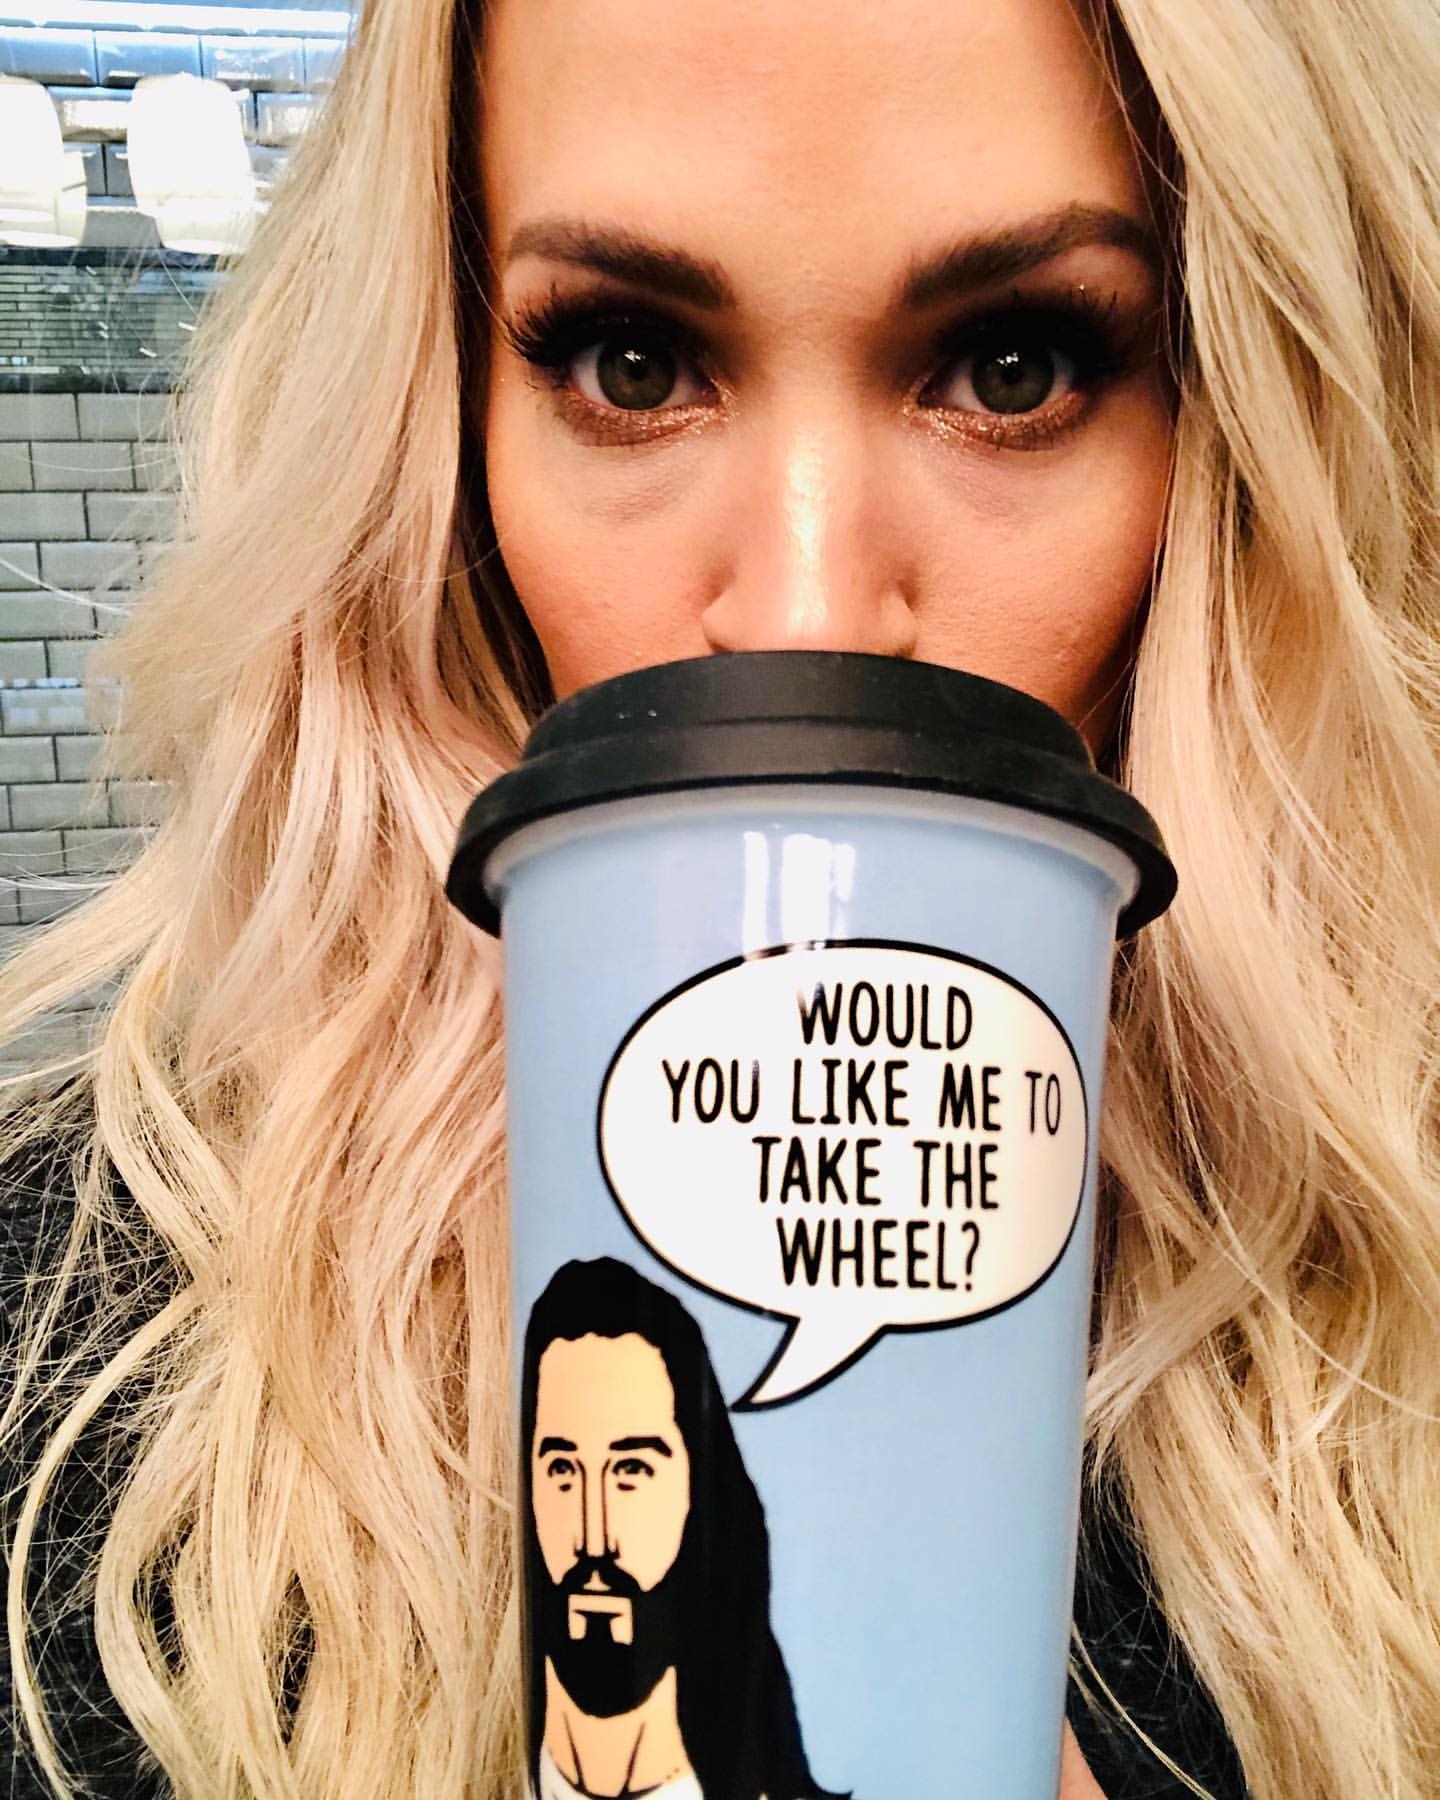 Carrie Underwood â€“ Instagram and social media